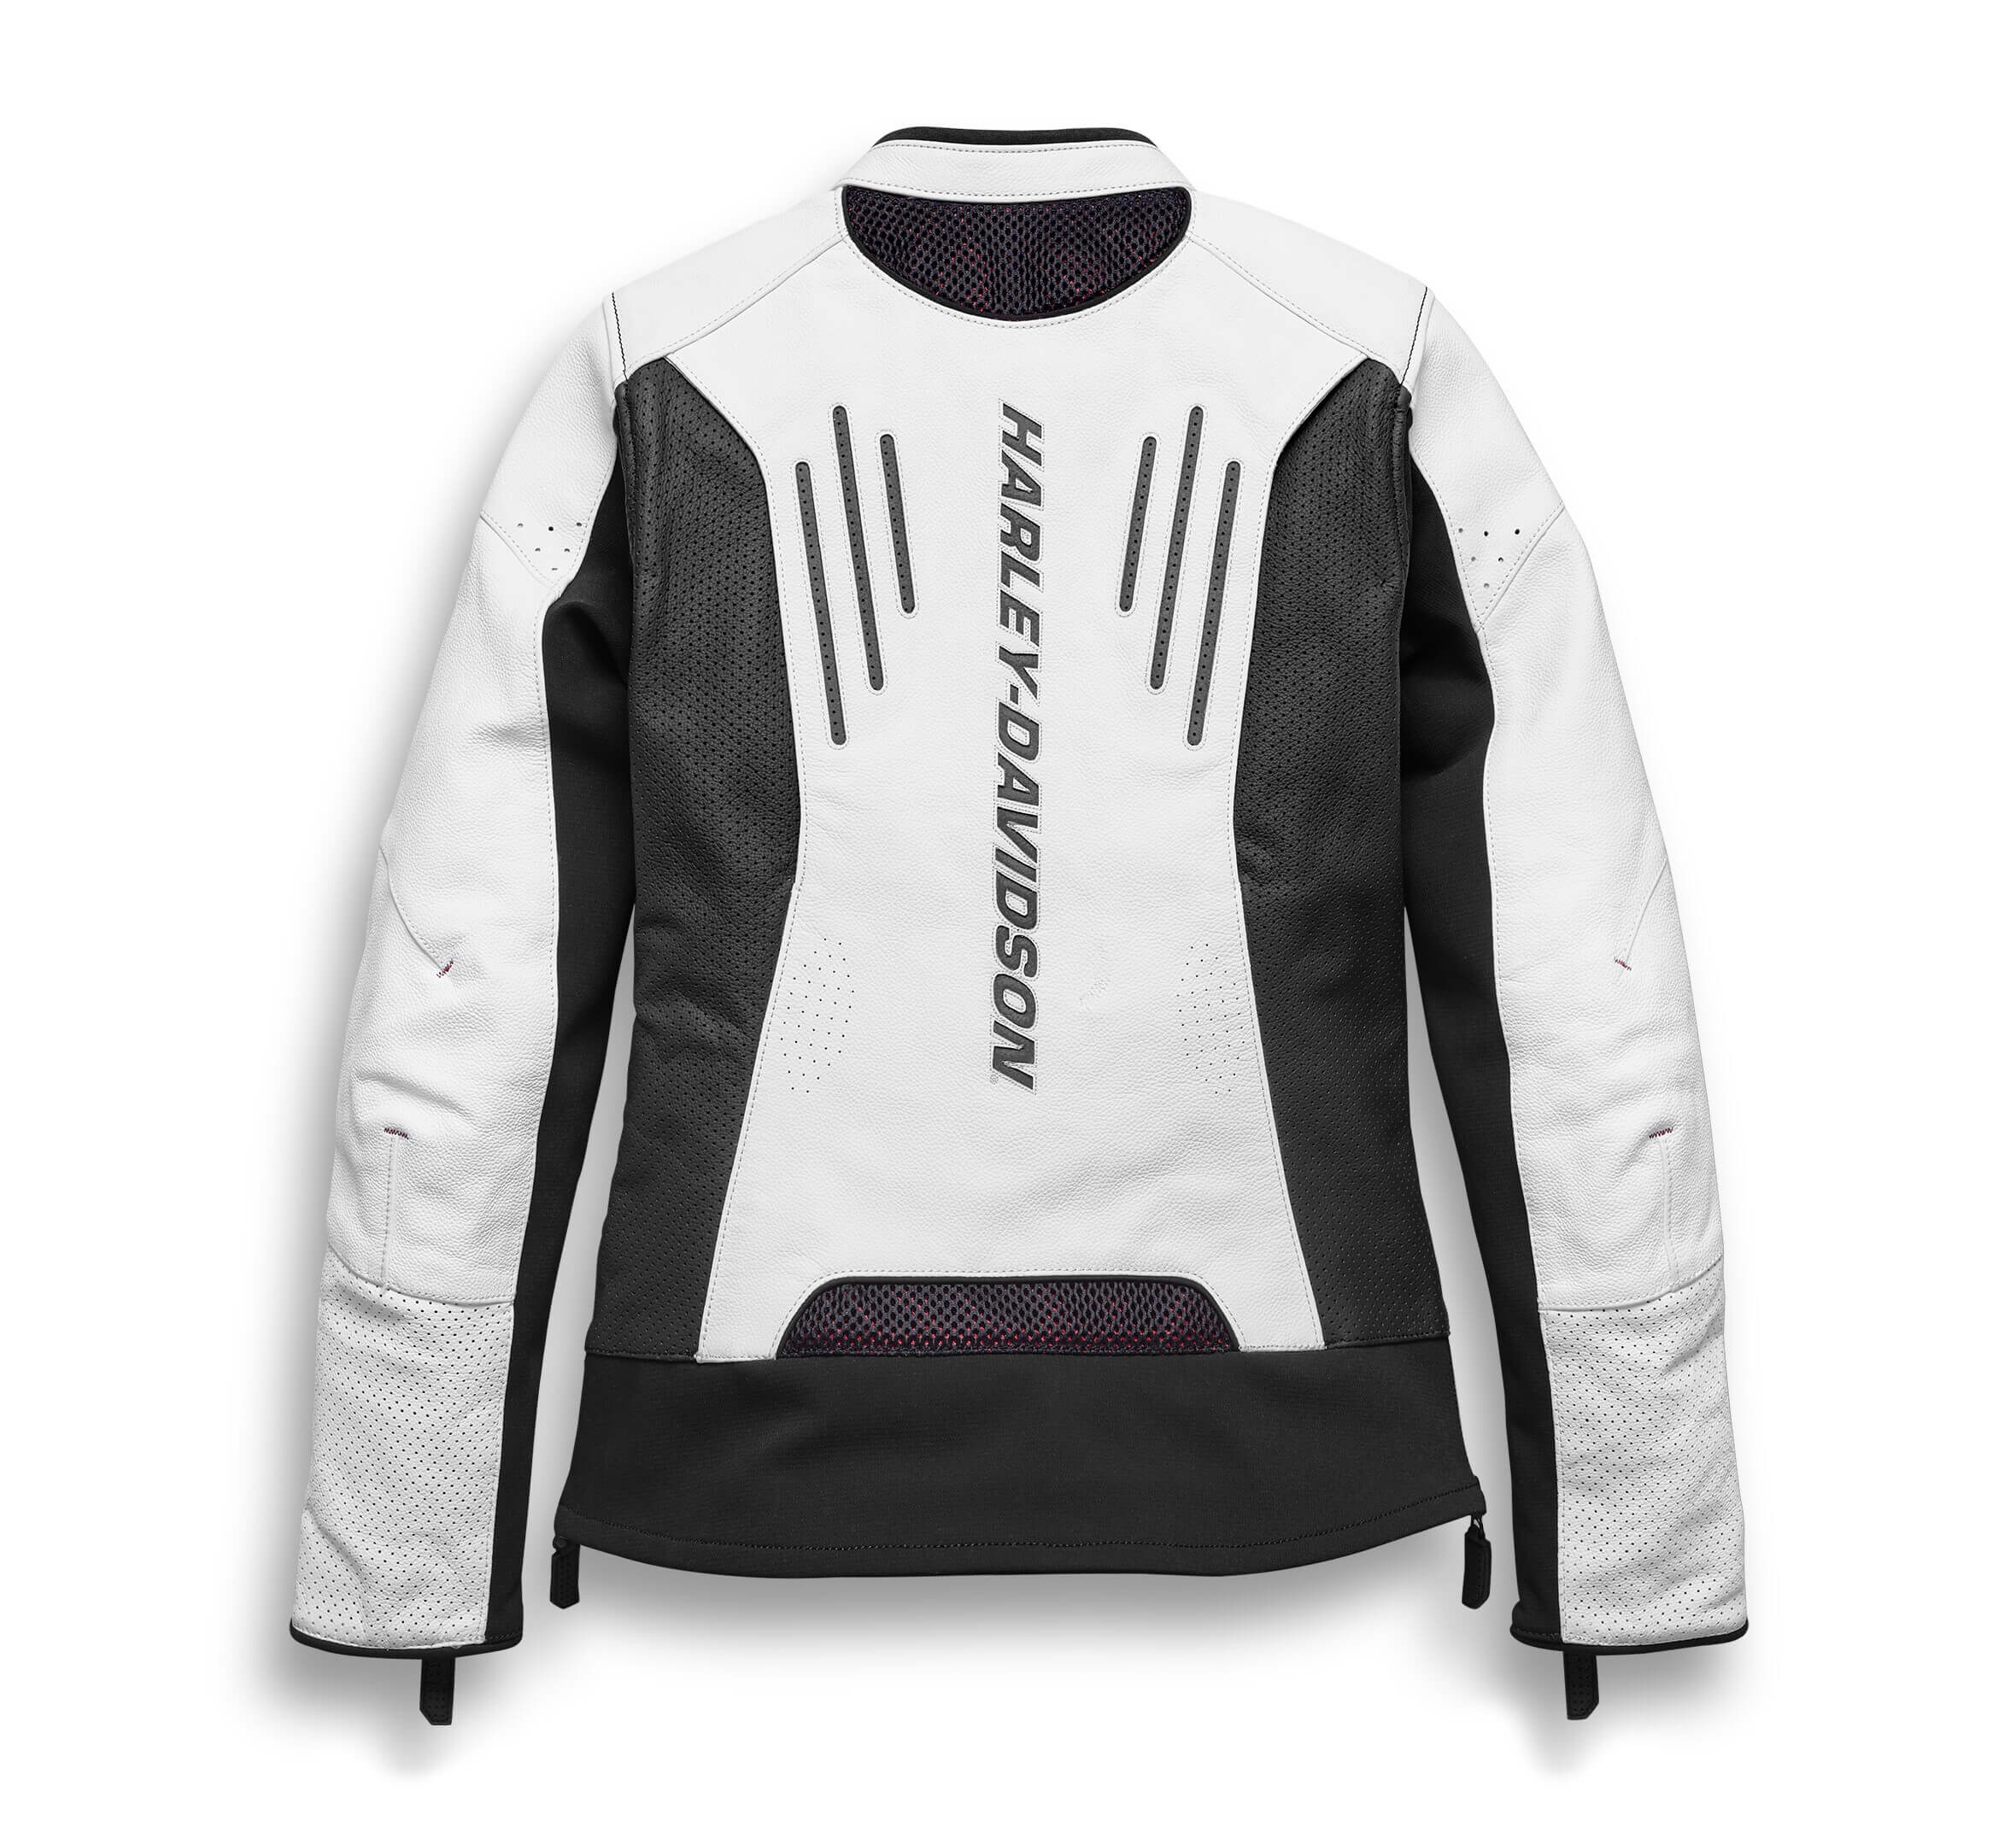 White Black Harley Davidson Motorcycle Leather Jacket - Maker of Jacket